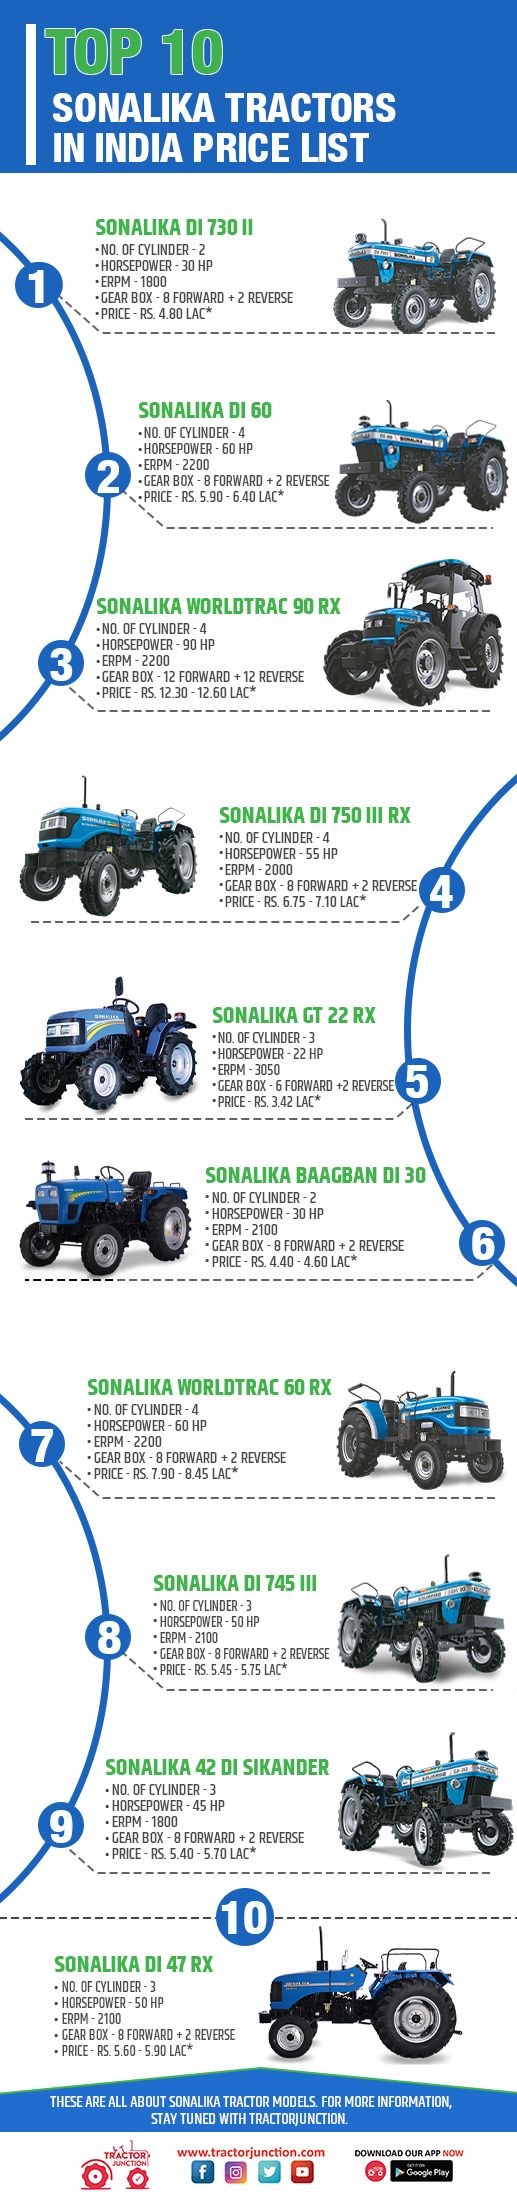 Top 10 Sonalika Tractors in India Price List